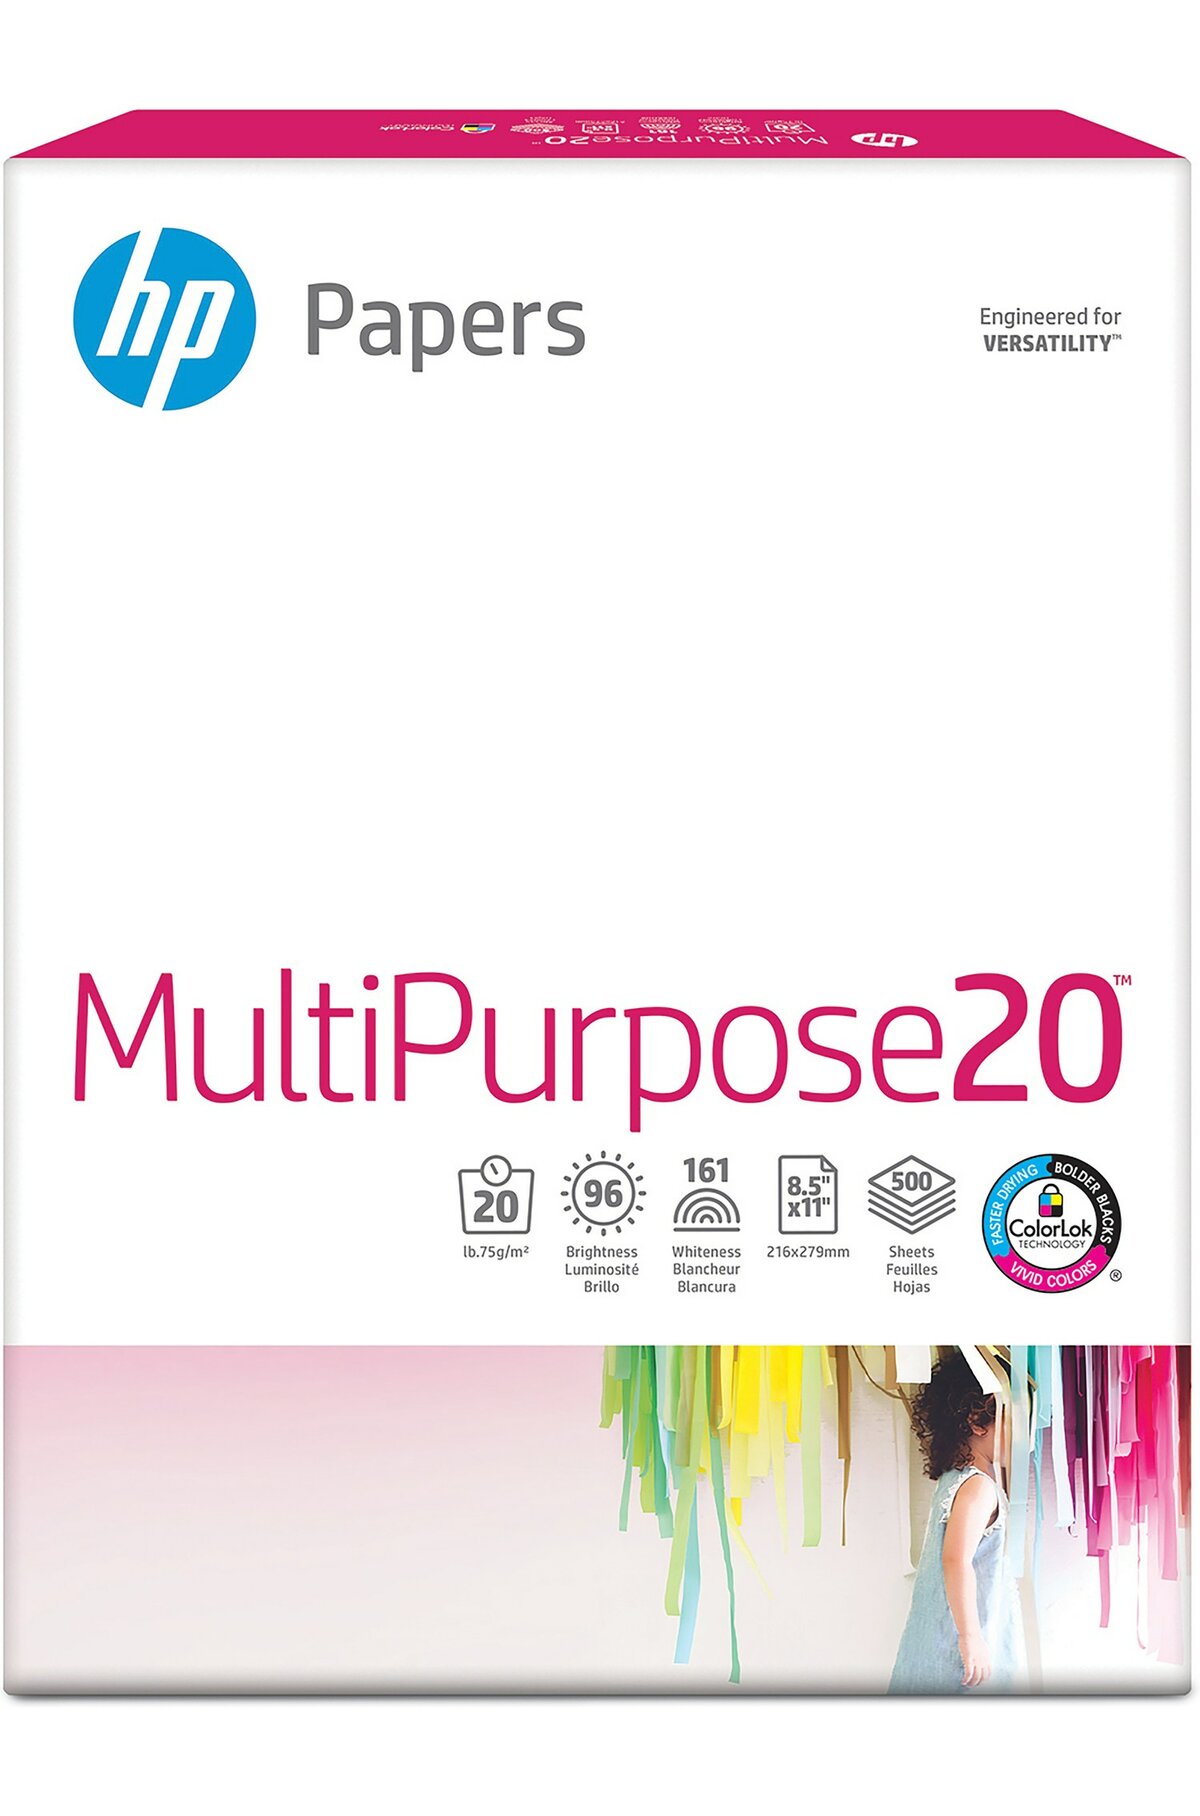 MultiPurpose20 Paper, 96 Bright, 20 lb Bond Weight, 8.5 x 11